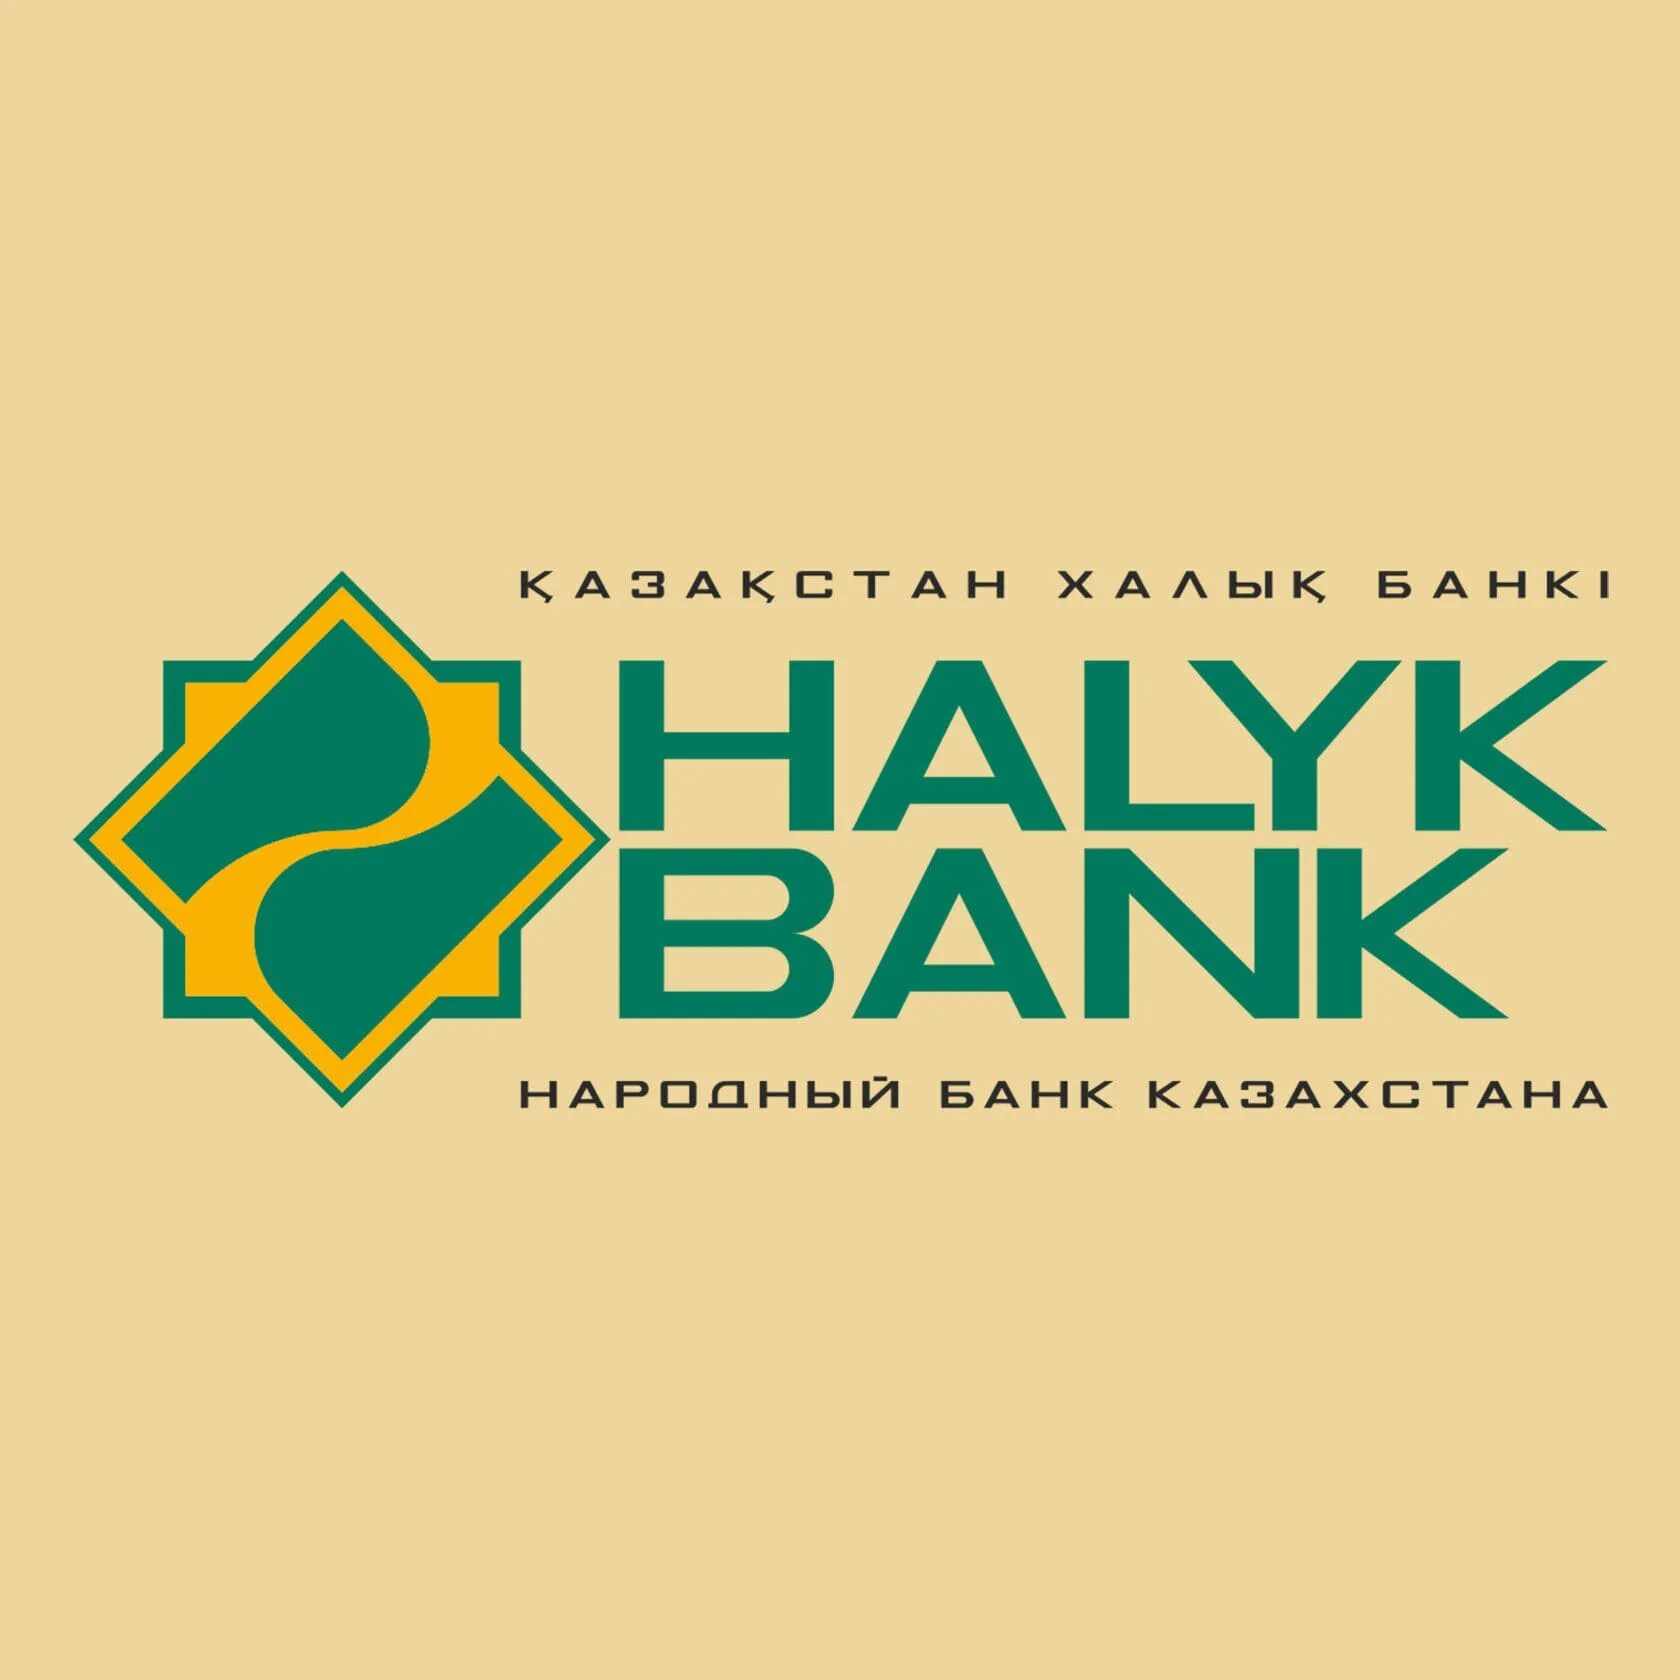 Халык банк. Народный банк логотип. Банк Halyk Bank. Халык банк Казахстан.